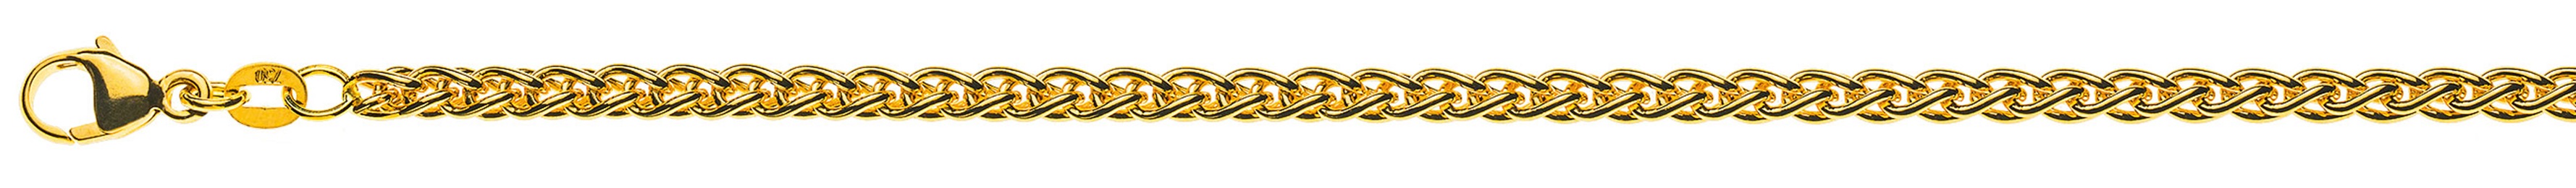 AURONOS Prestige Necklace yellow gold 18K cable chain 42cm 3.3mm